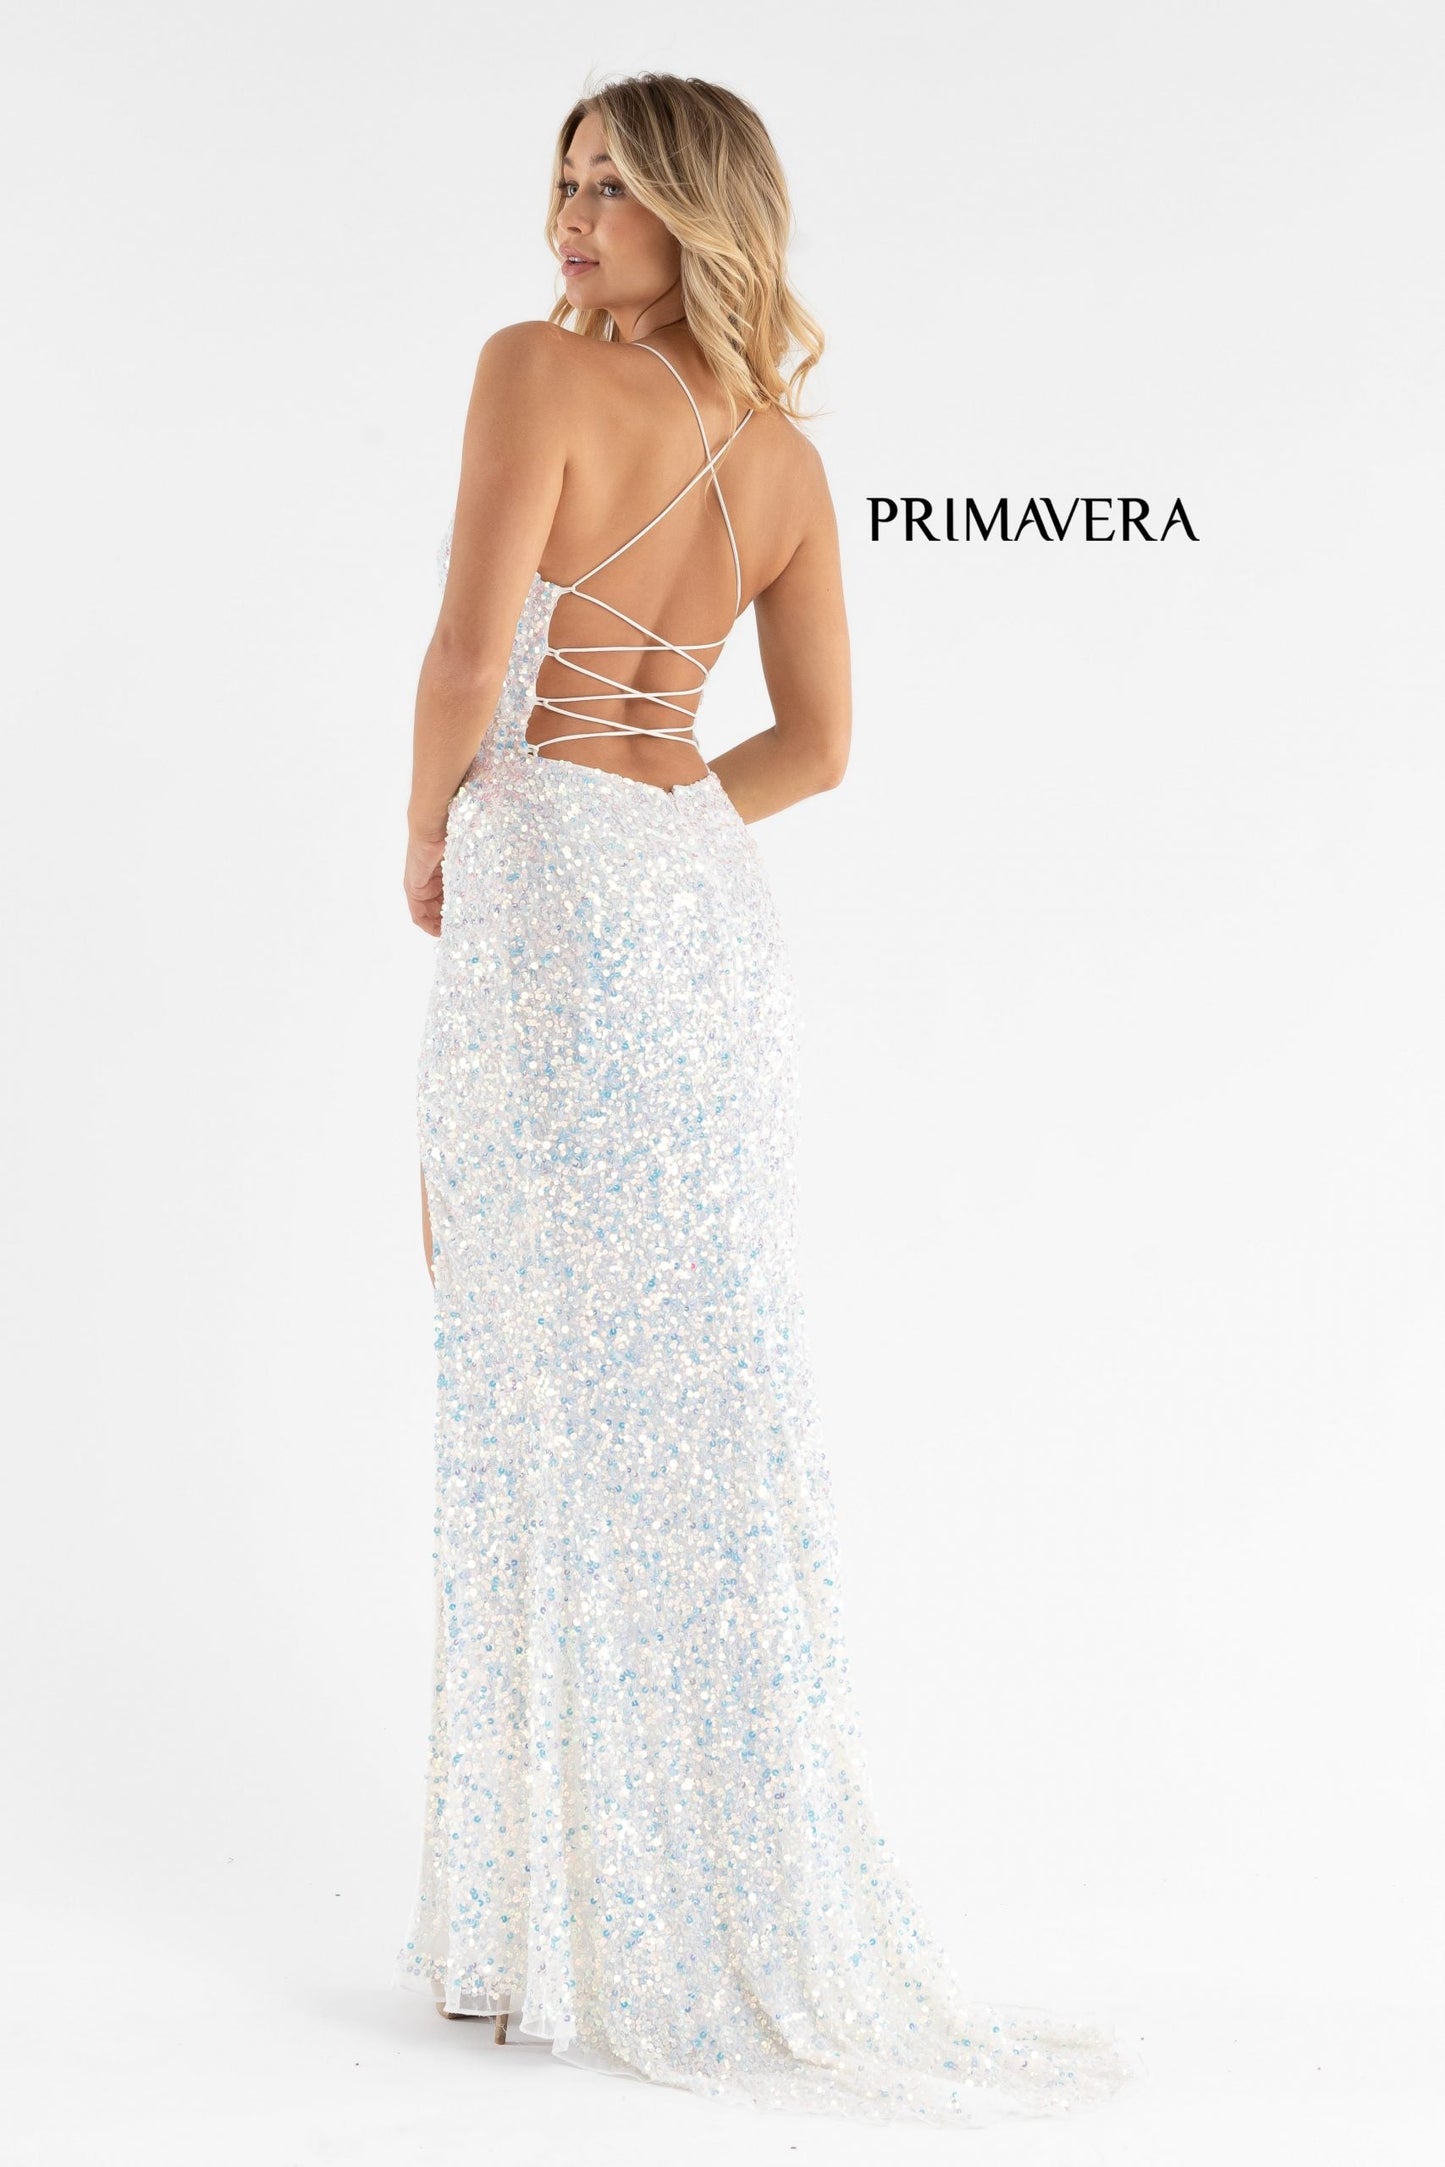 Primavera Couture 3791 Size 0 Turquoise Prom Dress V Neckline Sequins Lace Up Tie Back Side Slit